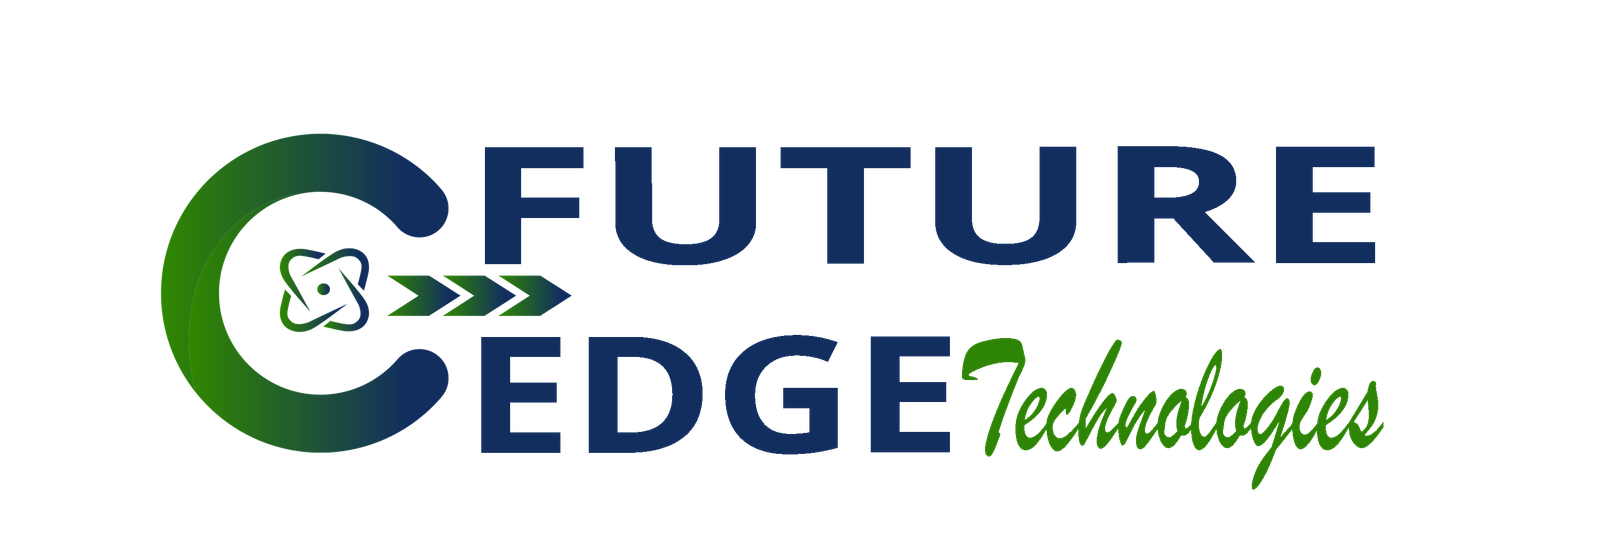 Future Edge Technology 2